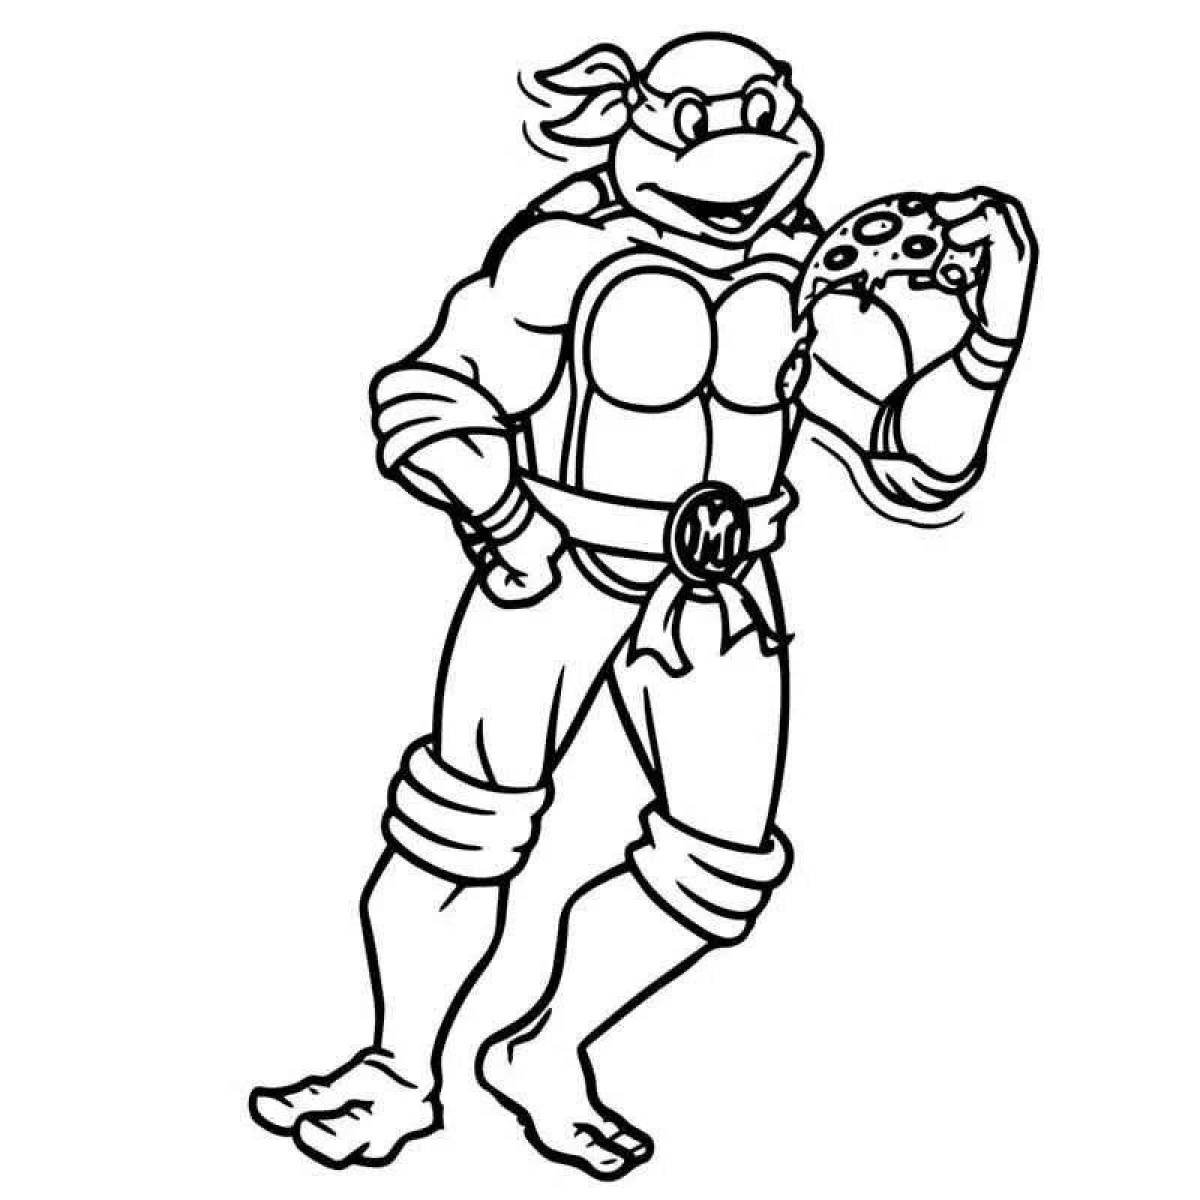 Michelangelo's fairy tale ninja turtles coloring page